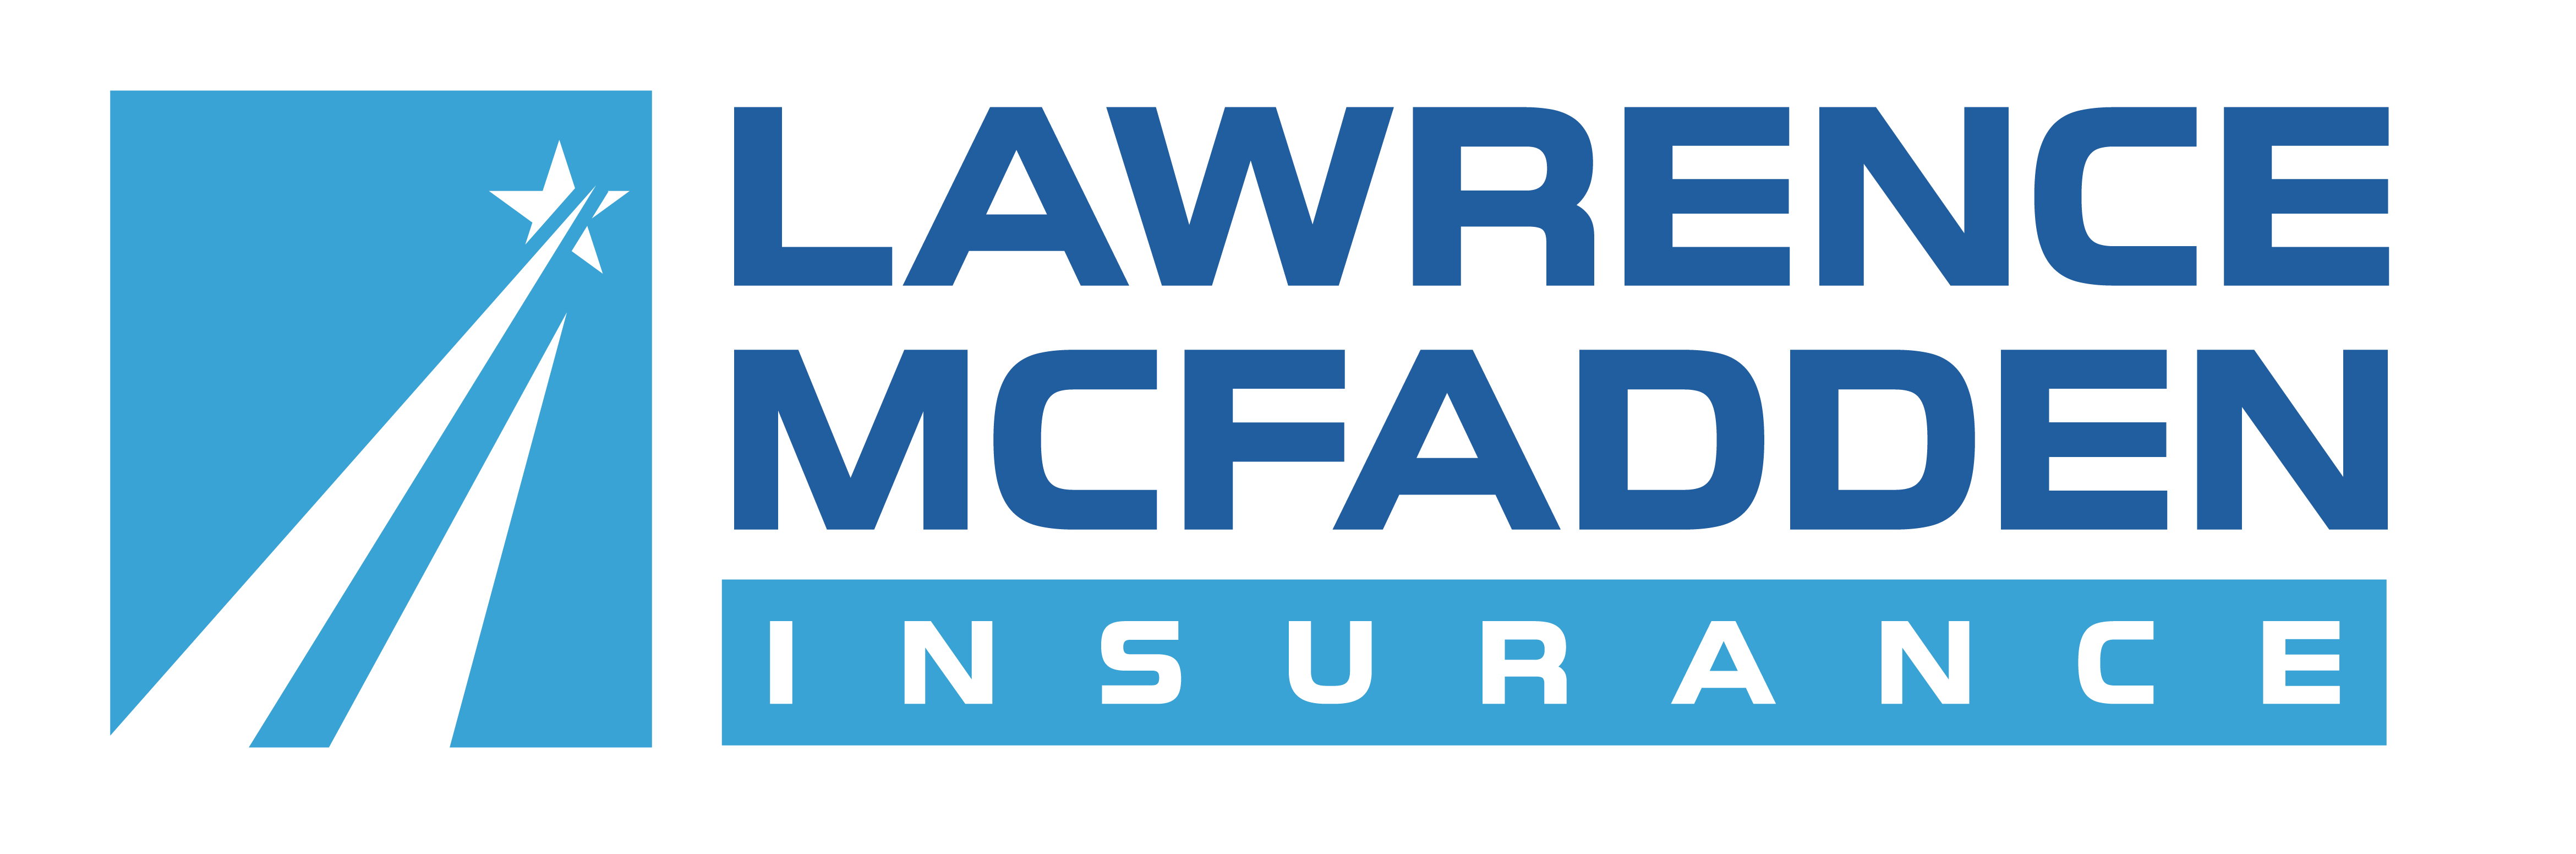 Lawrence McFadden Insurance Agency cover